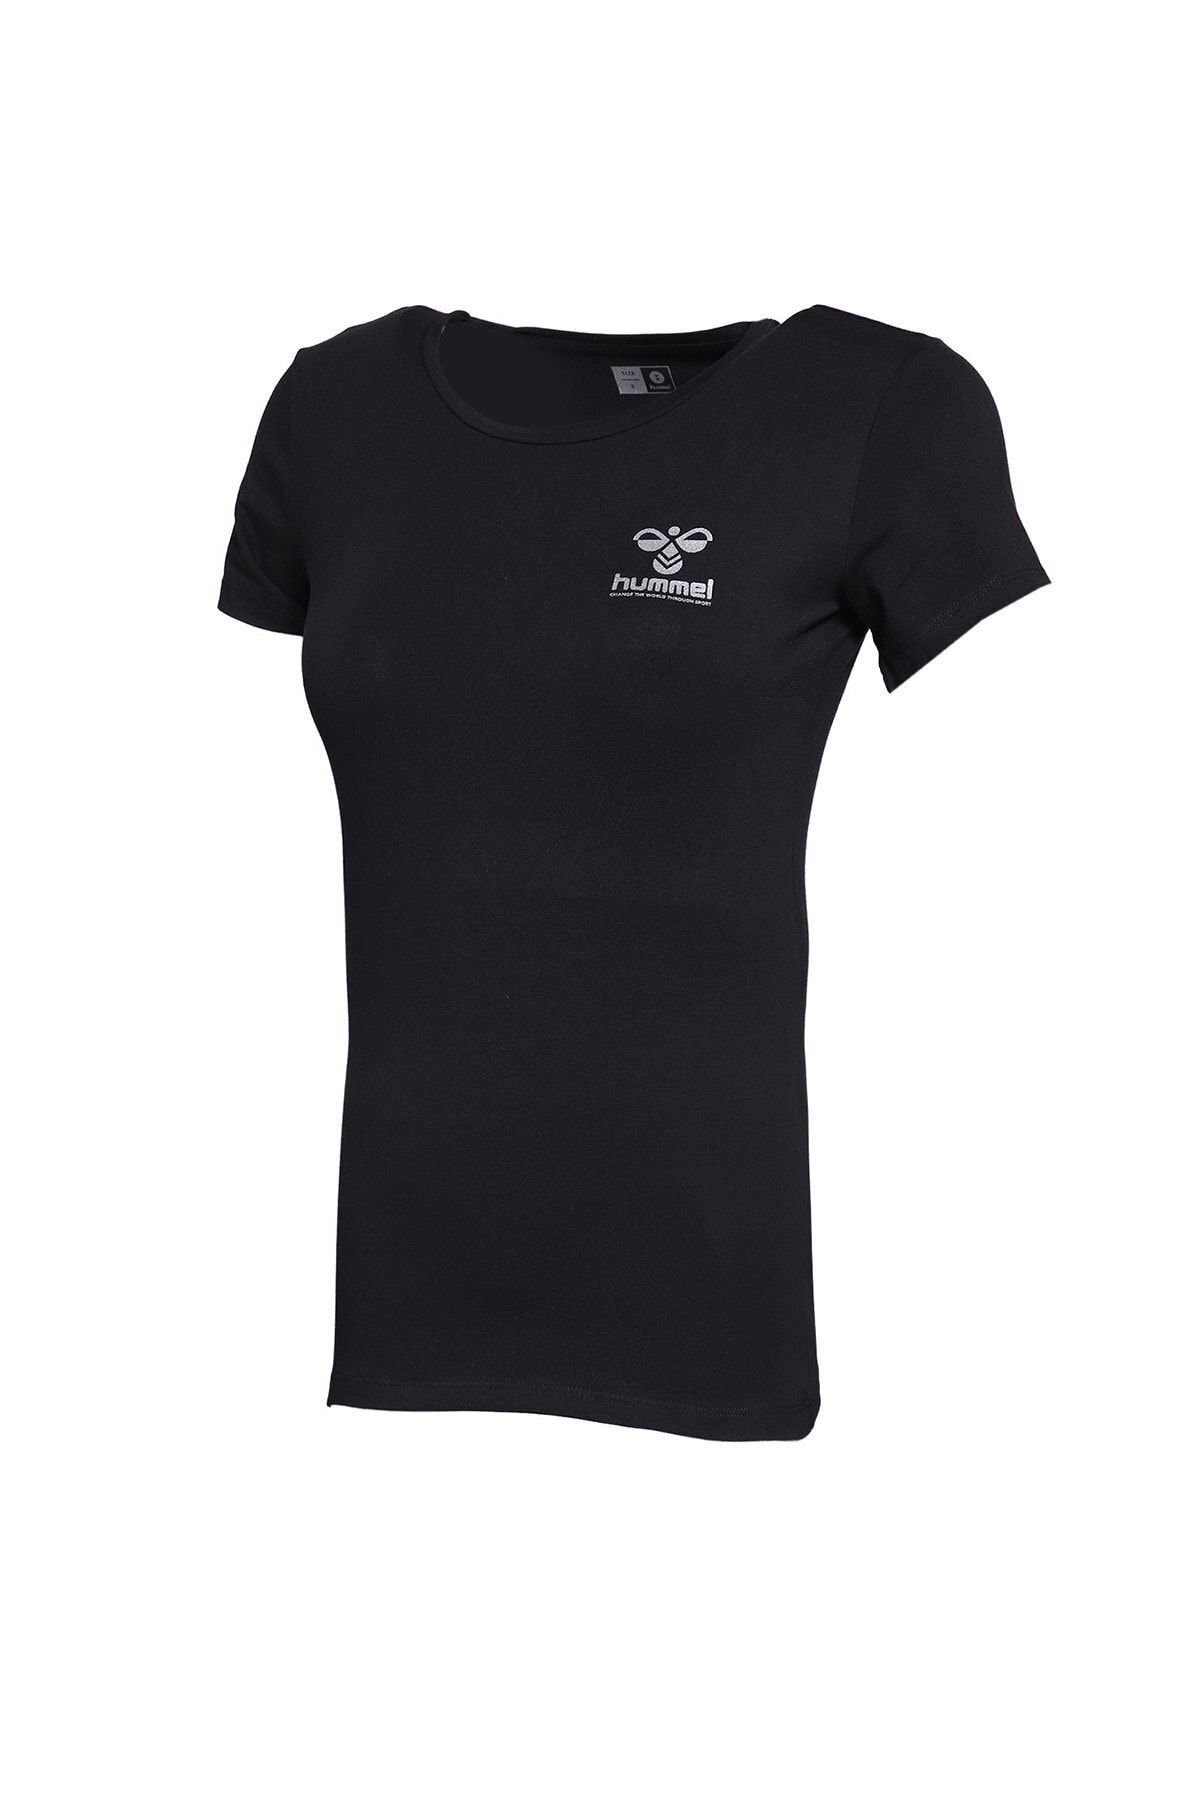 hummel Kadın Deni Siyah T-shirt 911306-2001